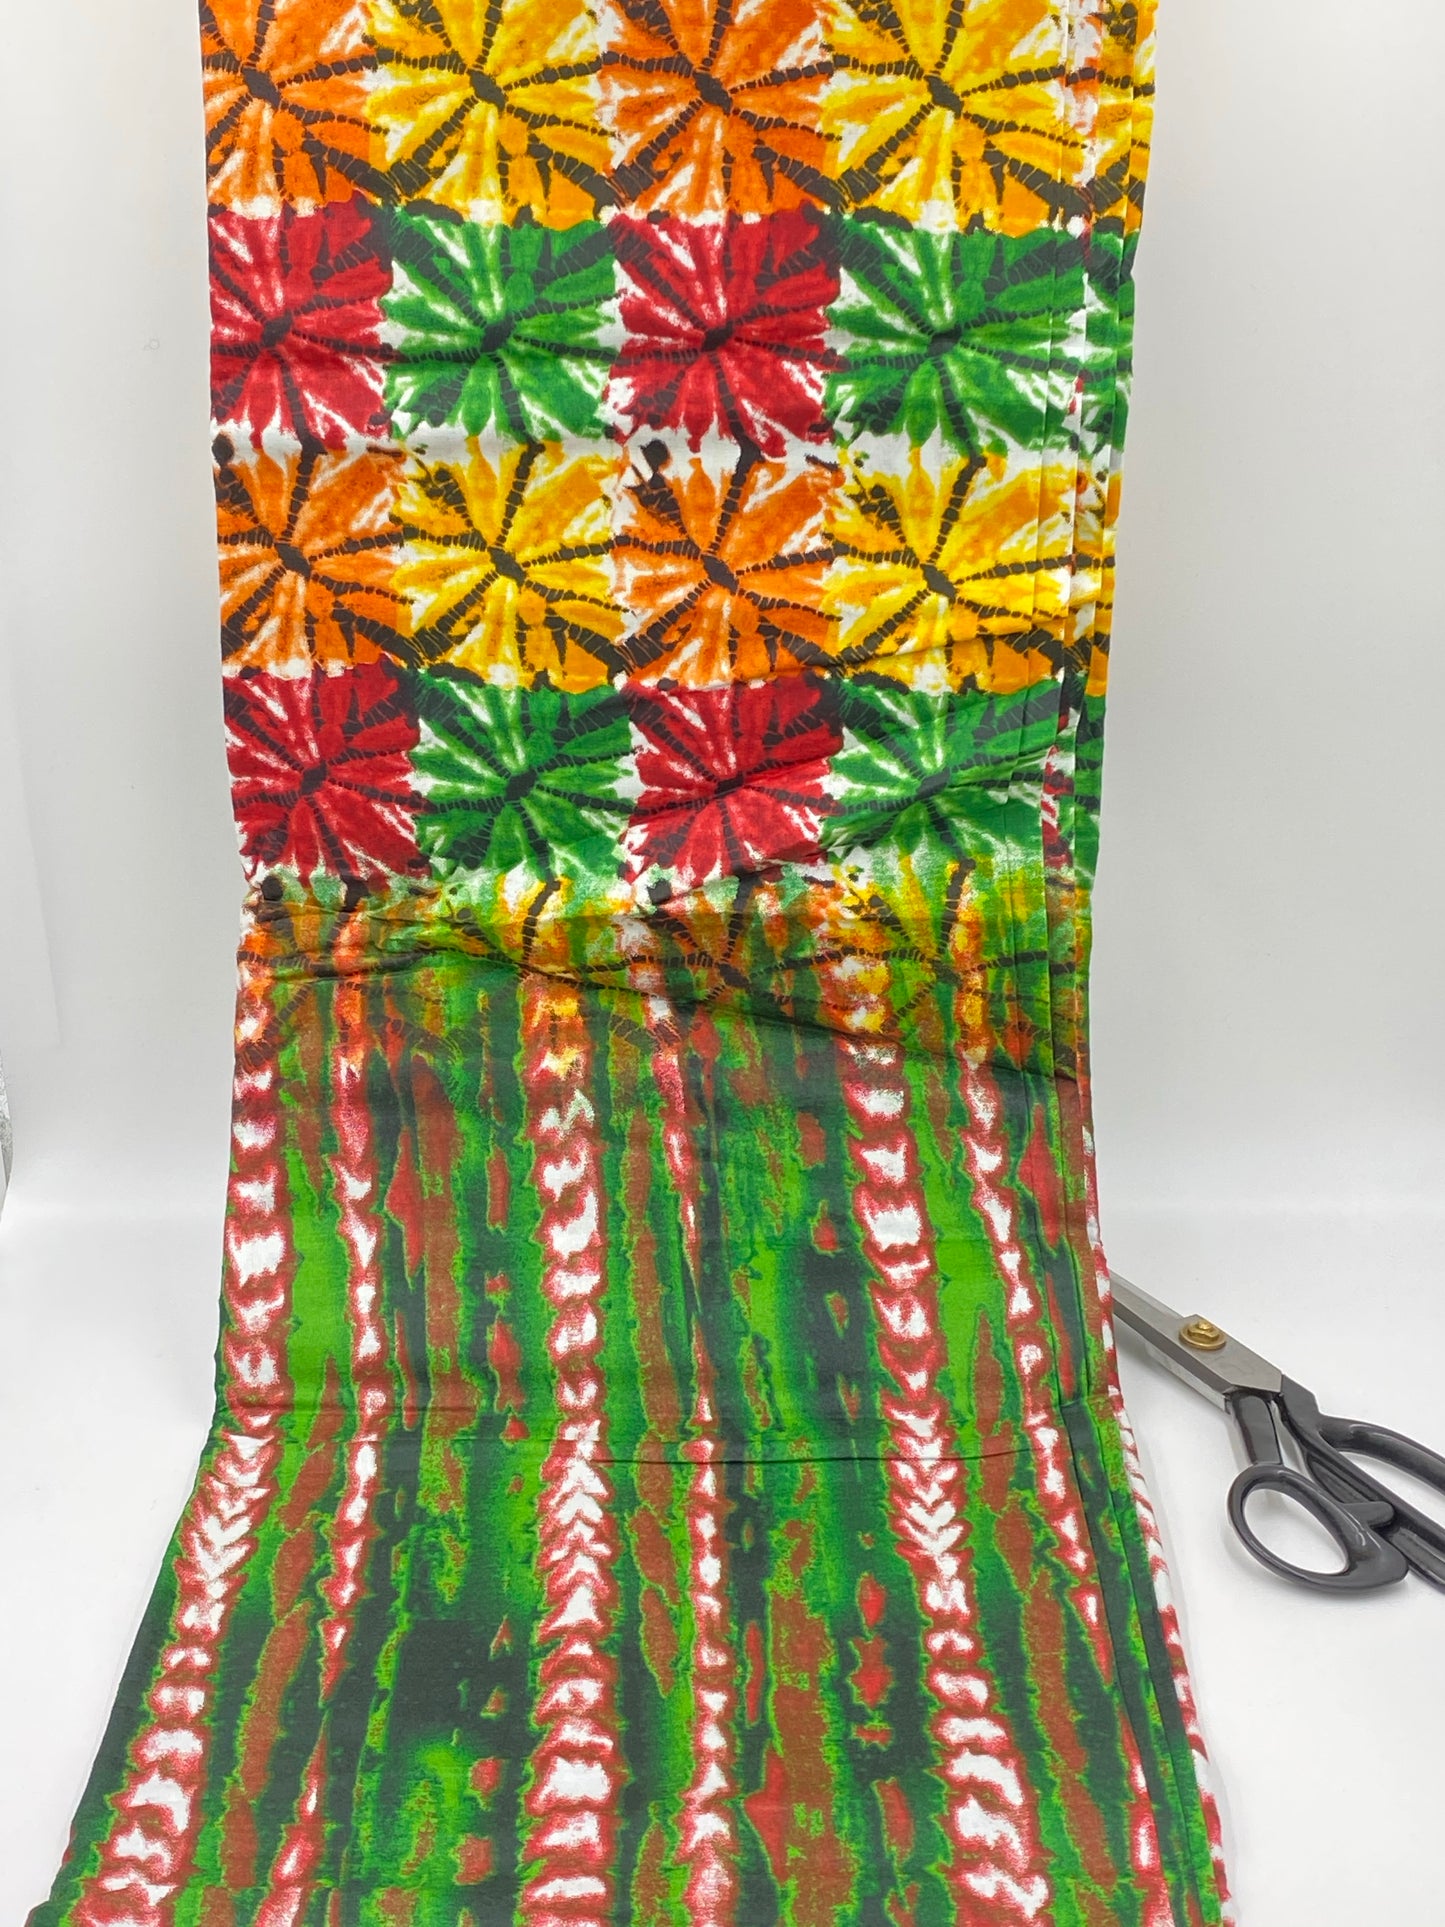 African fabric 100% cotton, African print Tye dye fabric 6 yards